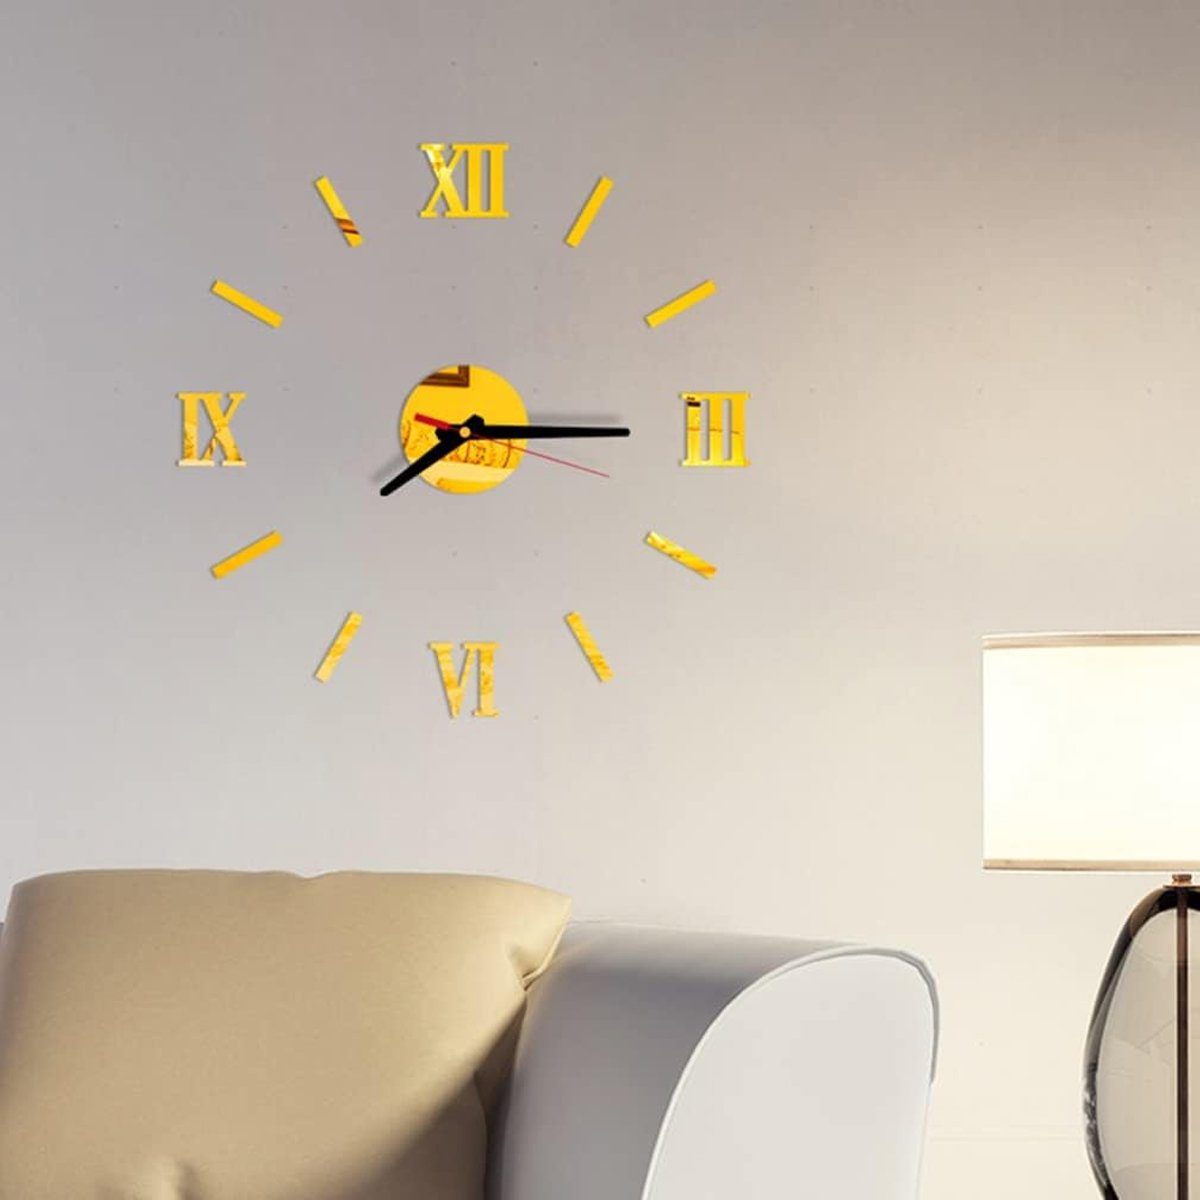 Houhence Wandsticker 3D Wandaufkleber Stumm große Gold Uhren, Wanduhr rahmenlose DIY Moderne